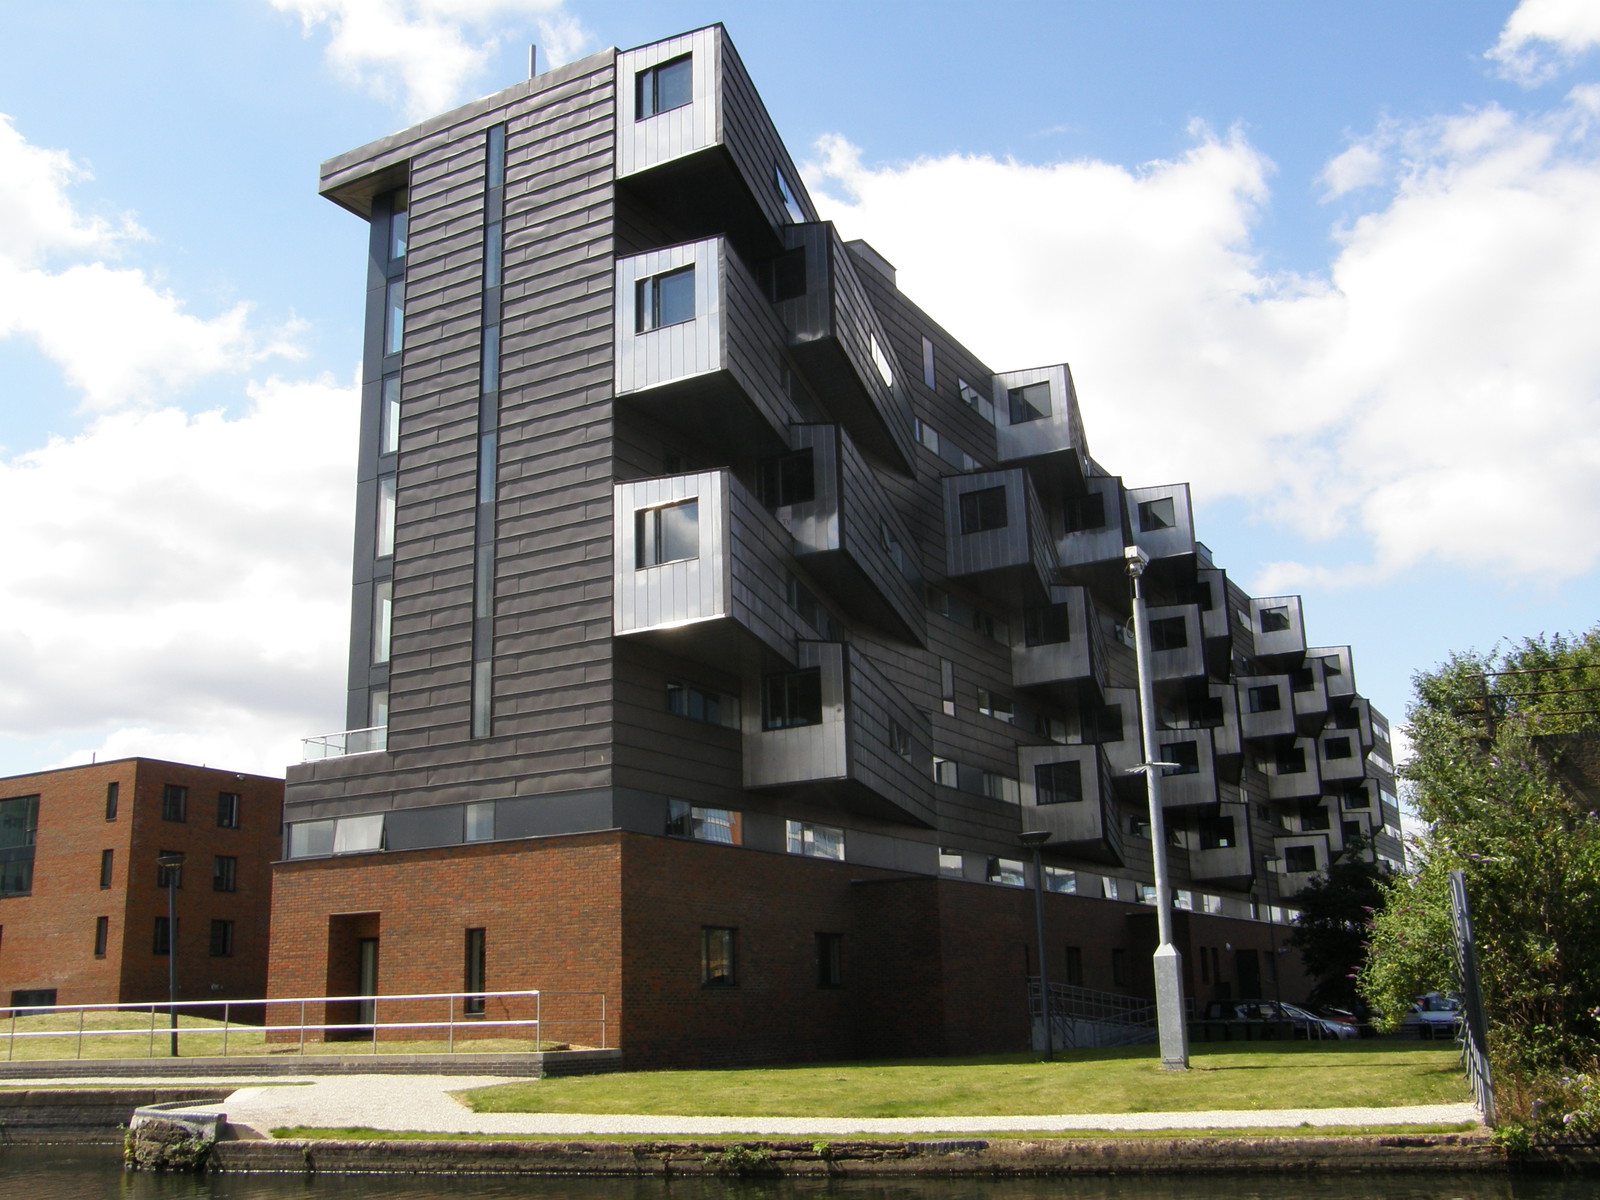 Modern flats on the Regent's Canal